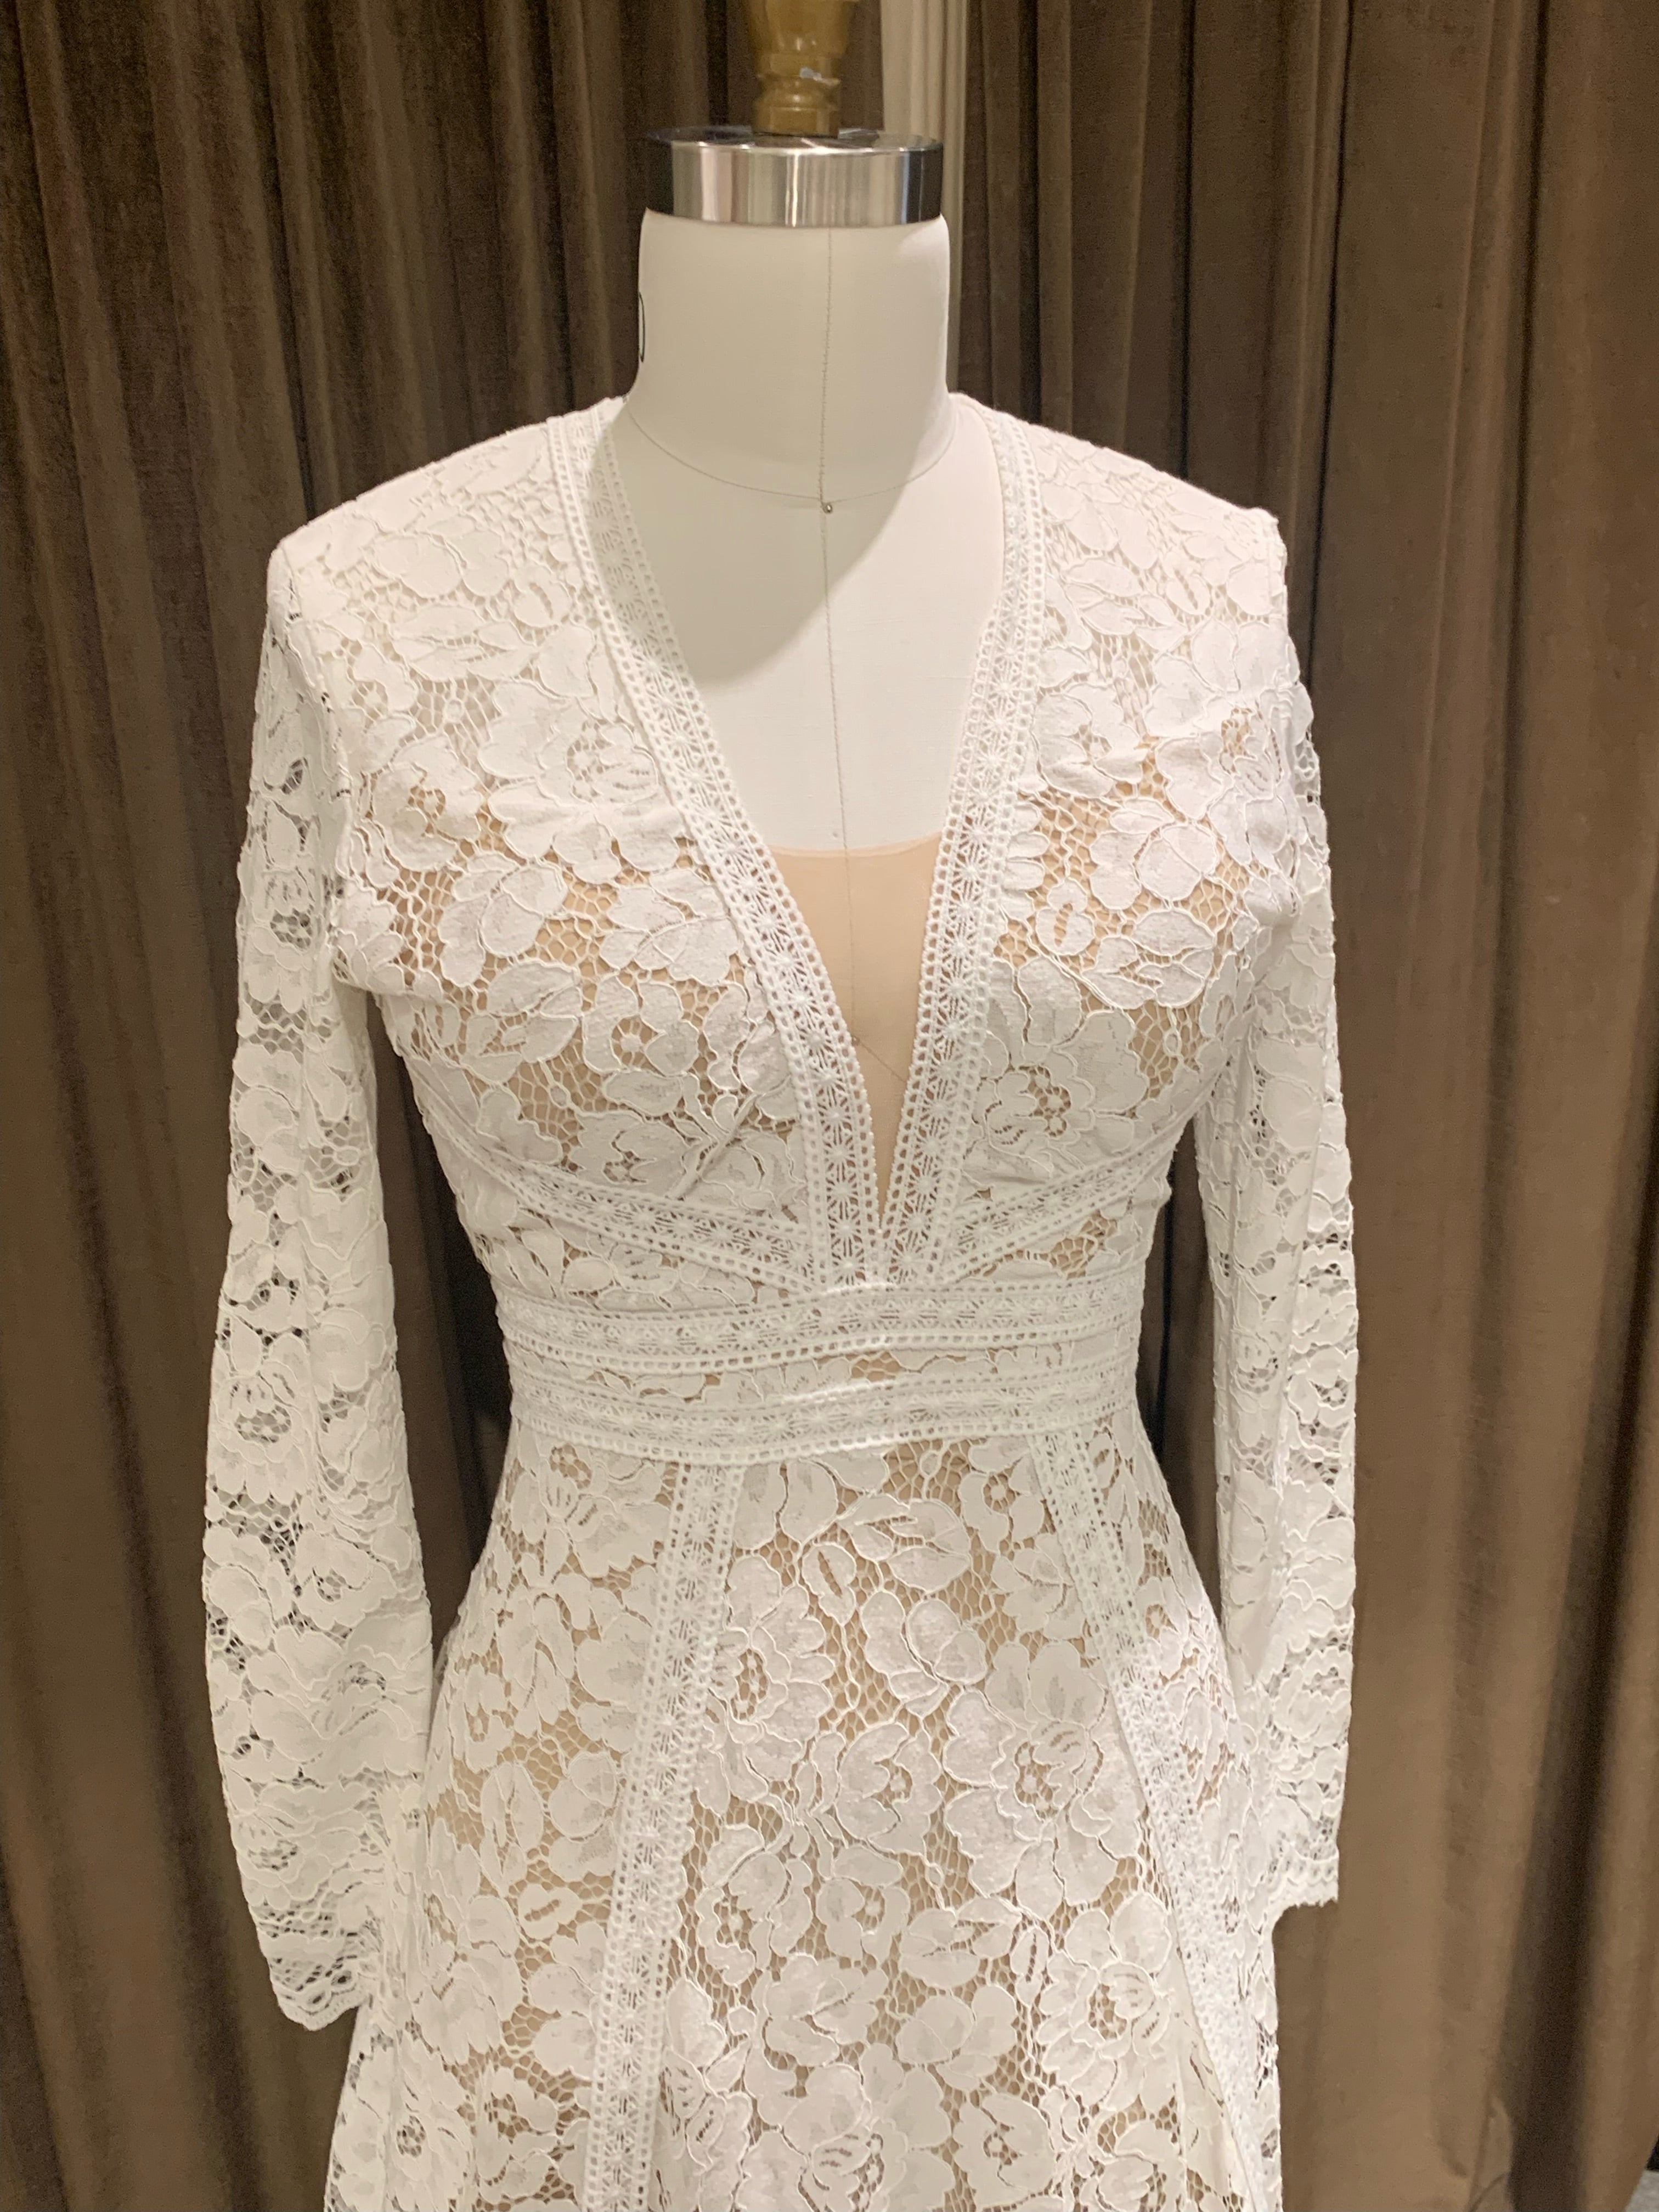 GC#35207 - Pronovias Moraine Wedding Dress in Size 8